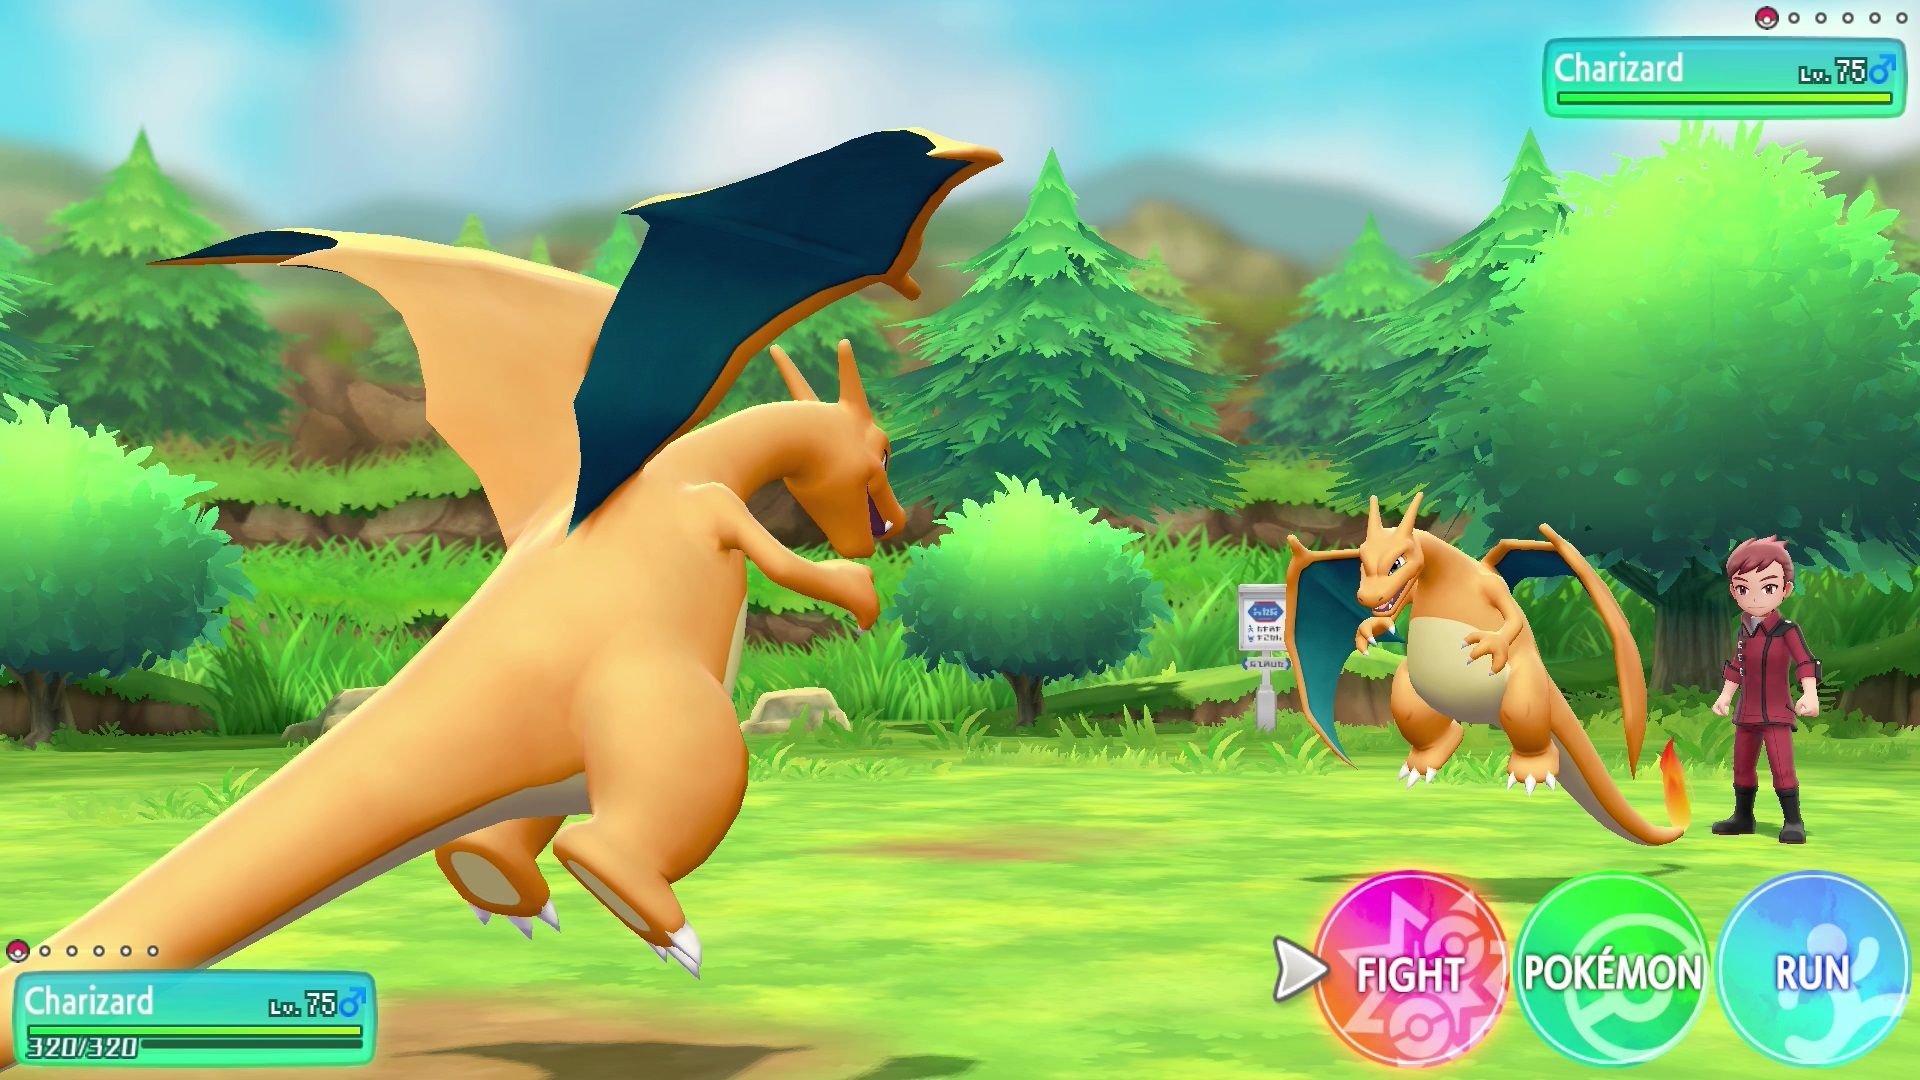 How to get Aerodactyl in Pokemon: Let's Go Pikachu and Eevee